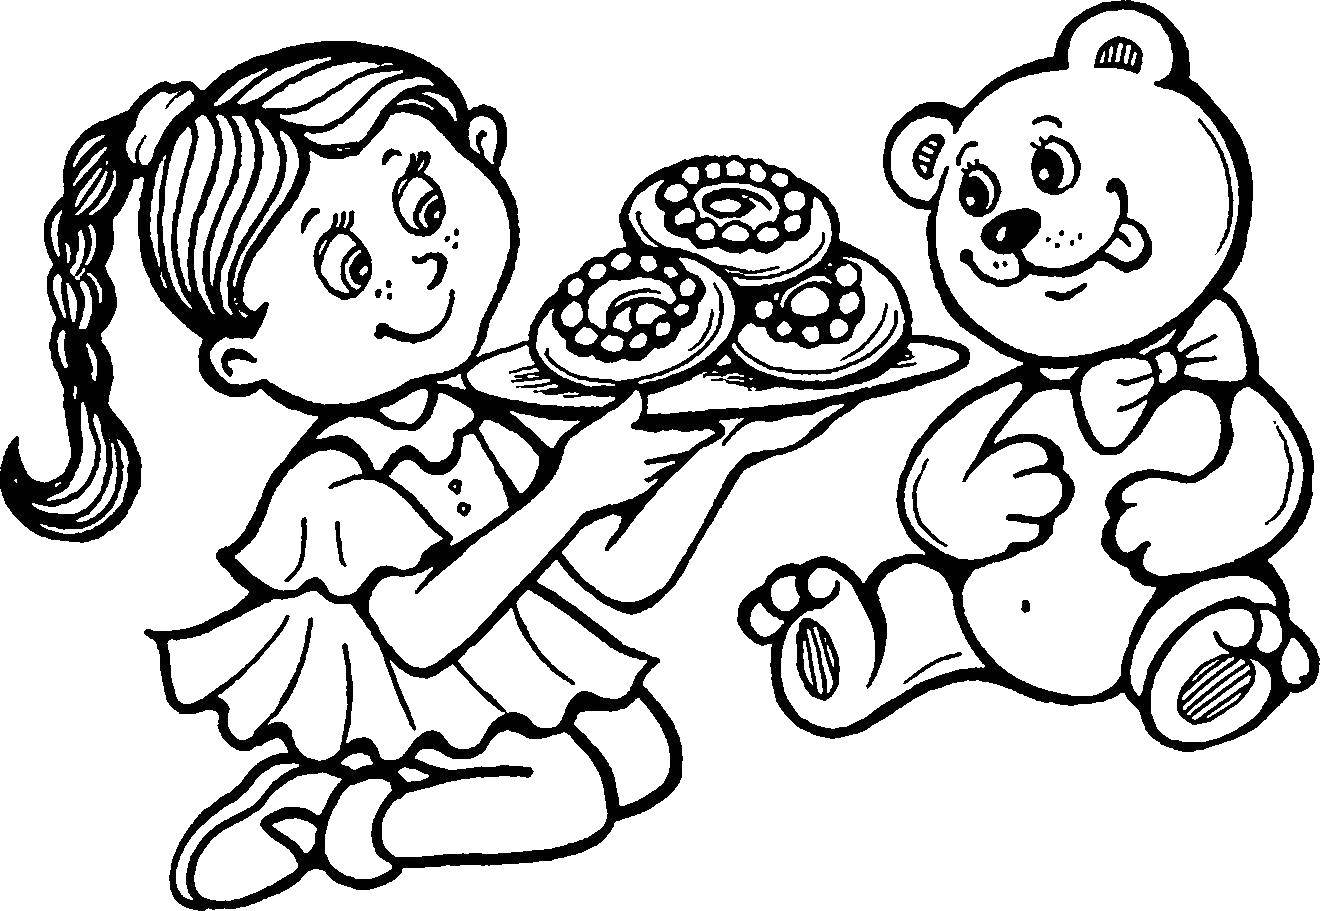 Coloring Girl feeding bear. Category For girls. Tags:  girl feeding bear.